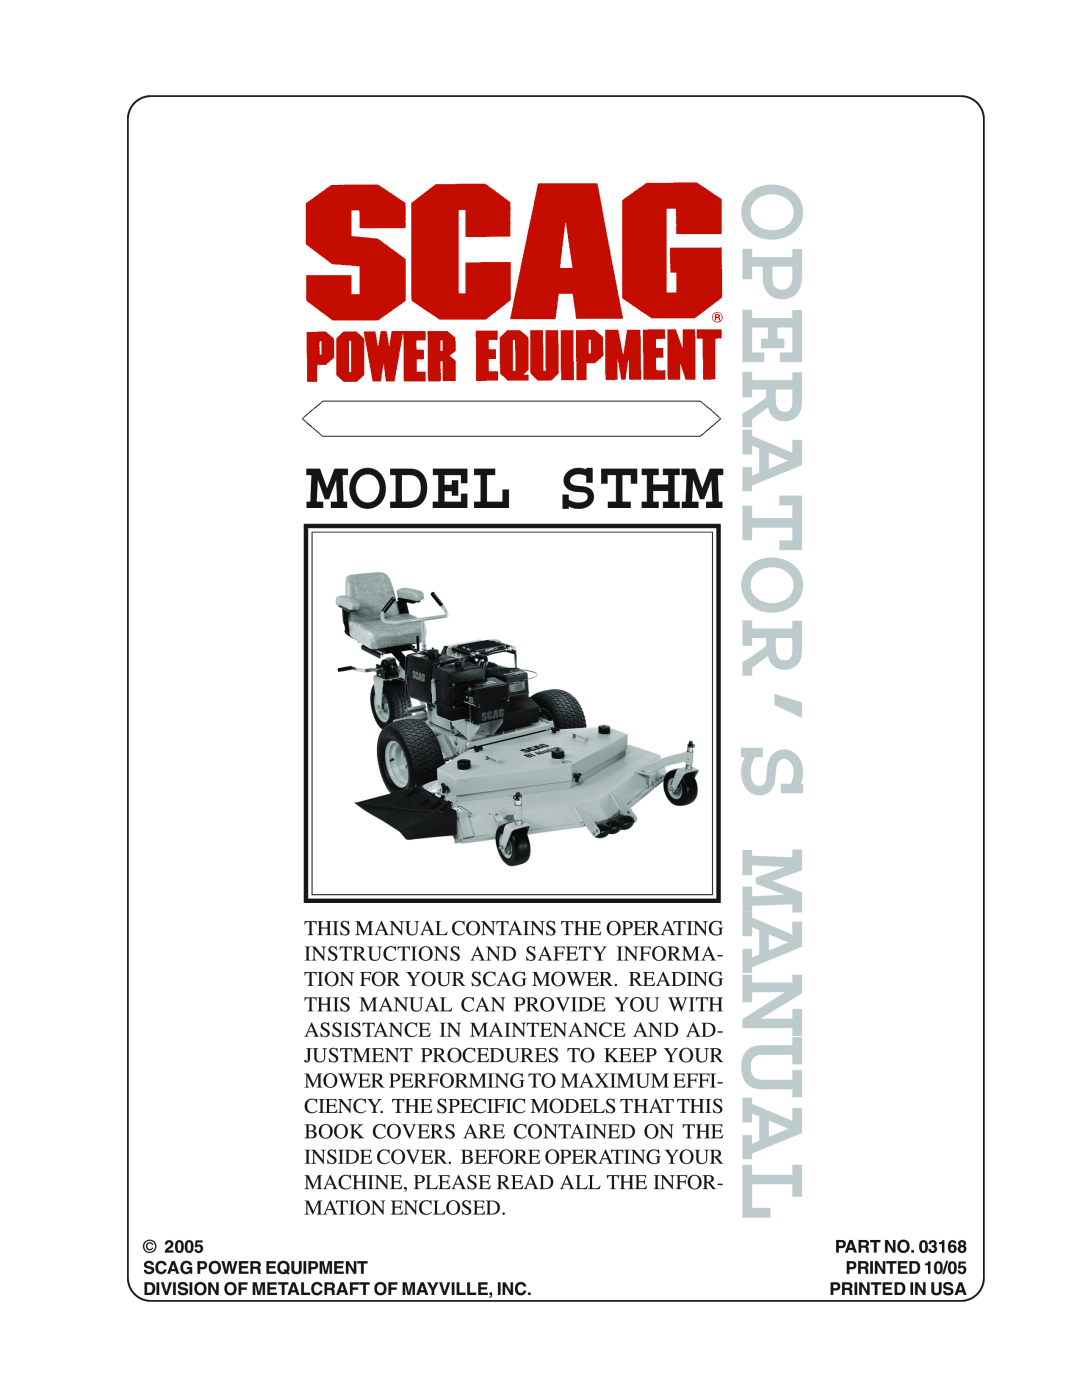 Scag Power Equipment STHM manual Operator’S Manual, Model Sthm 